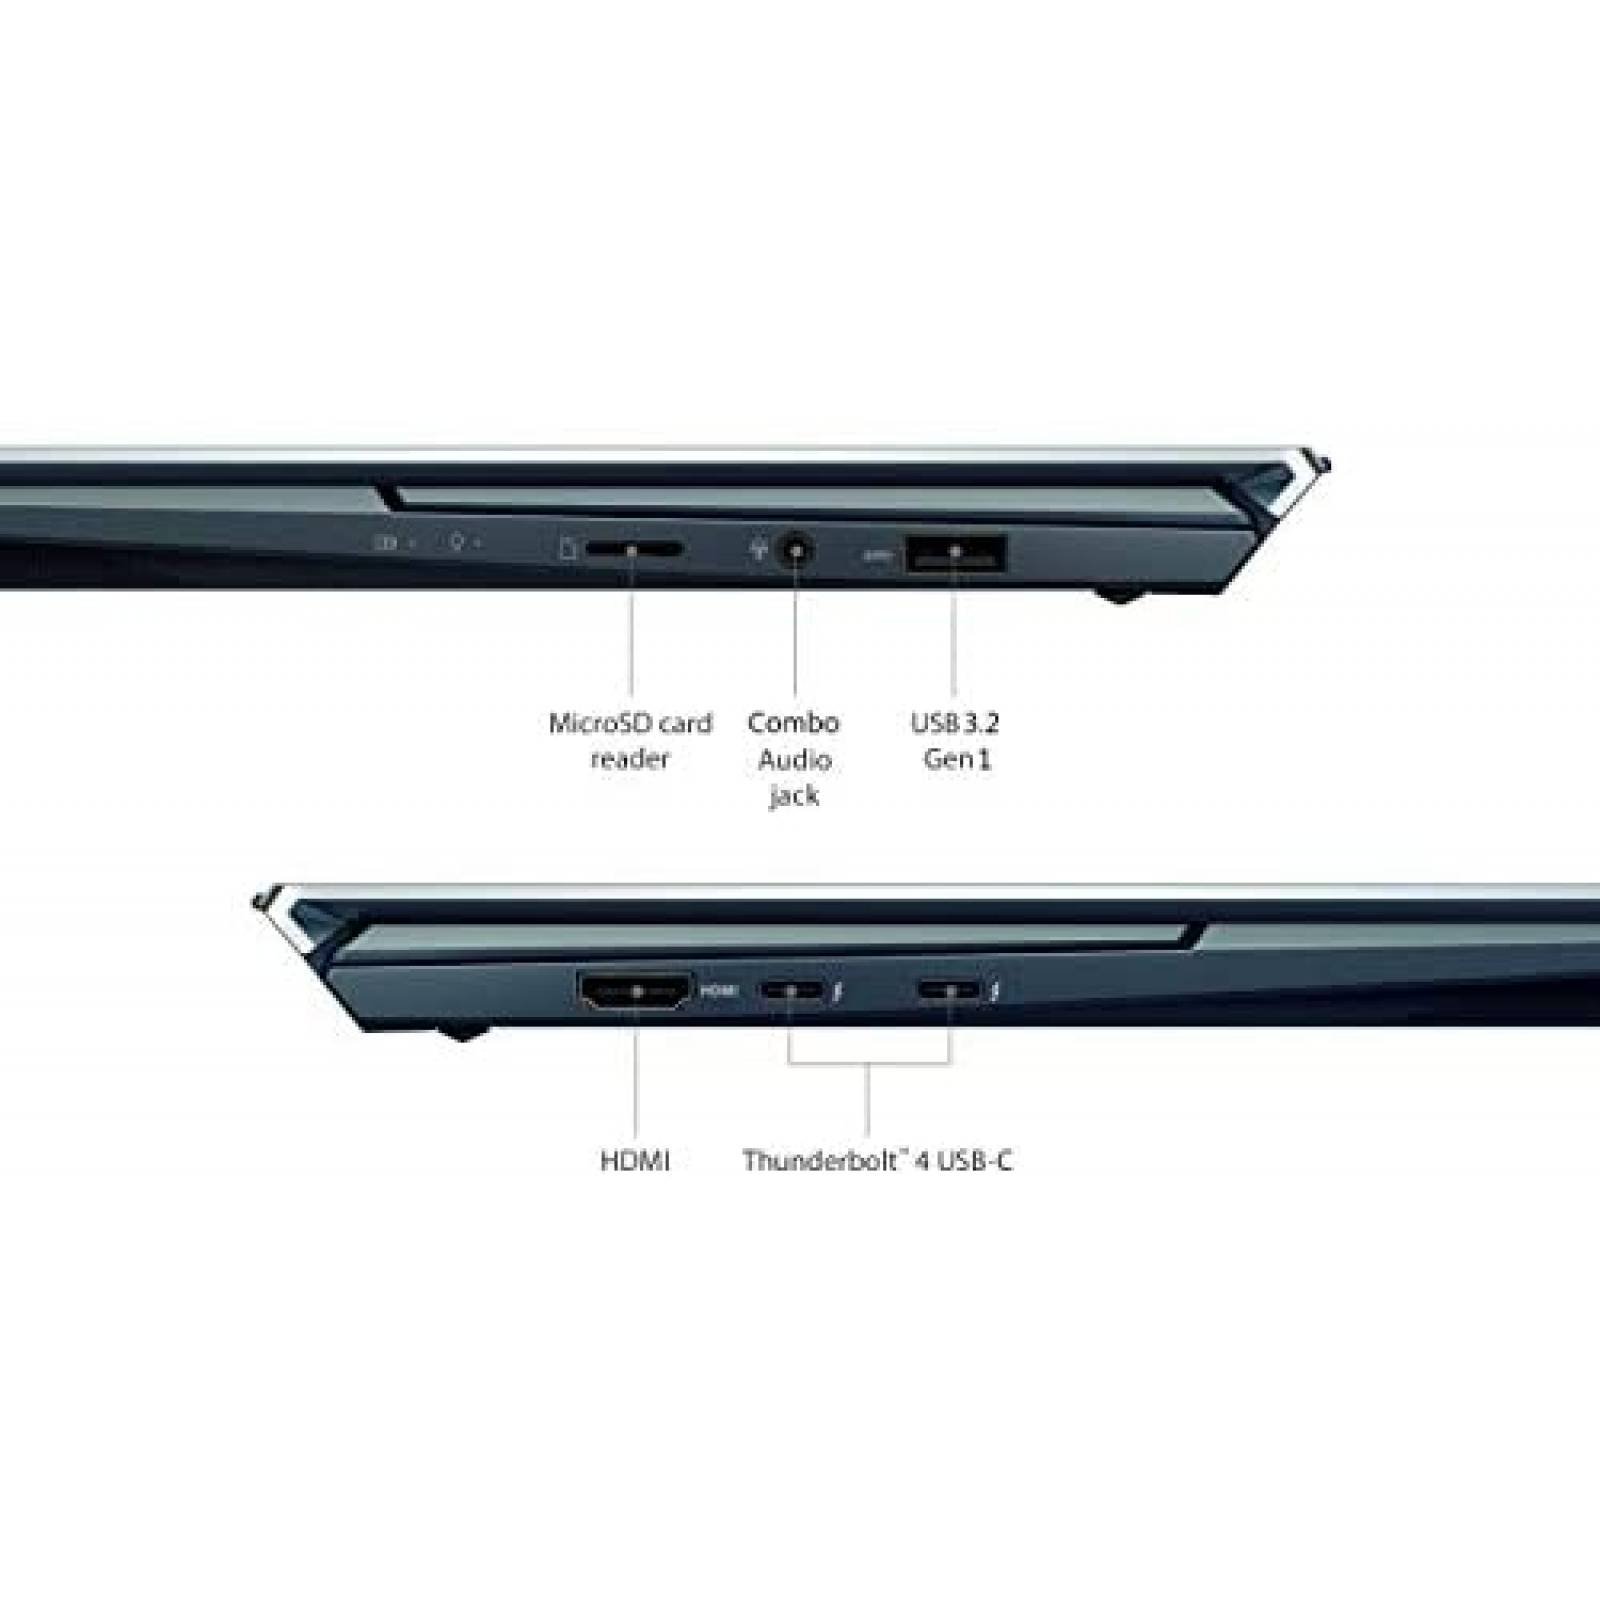 Laptop ASUS ZenBook Duo 14 i7 8GB 512GB Windows 10 Home